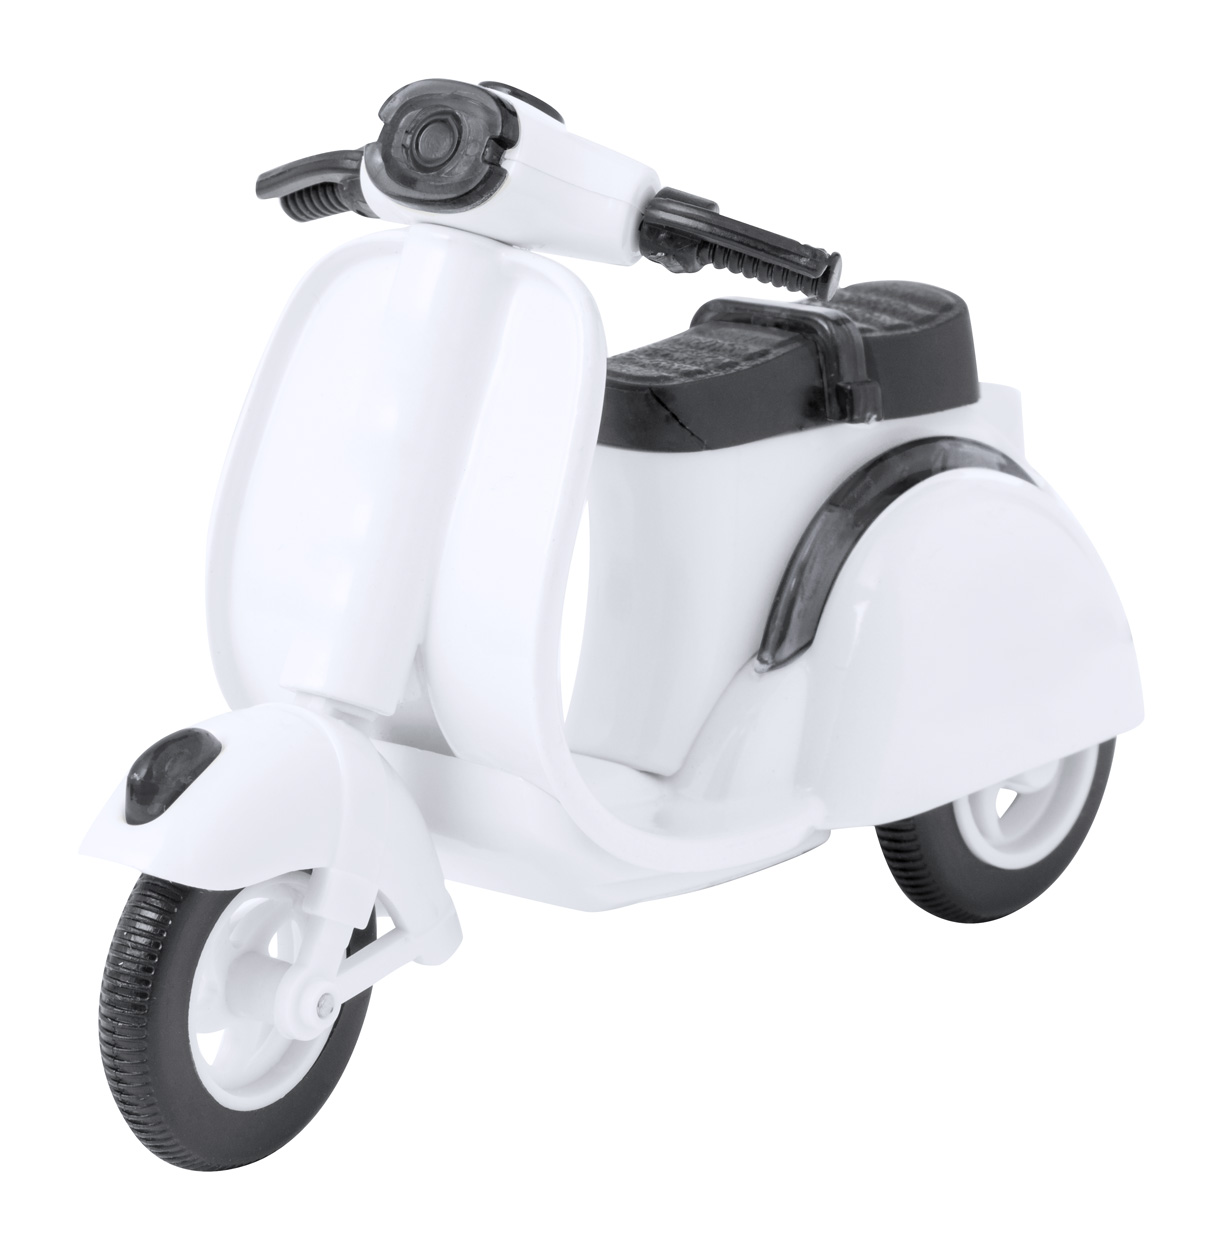 Vespak toy scooter White